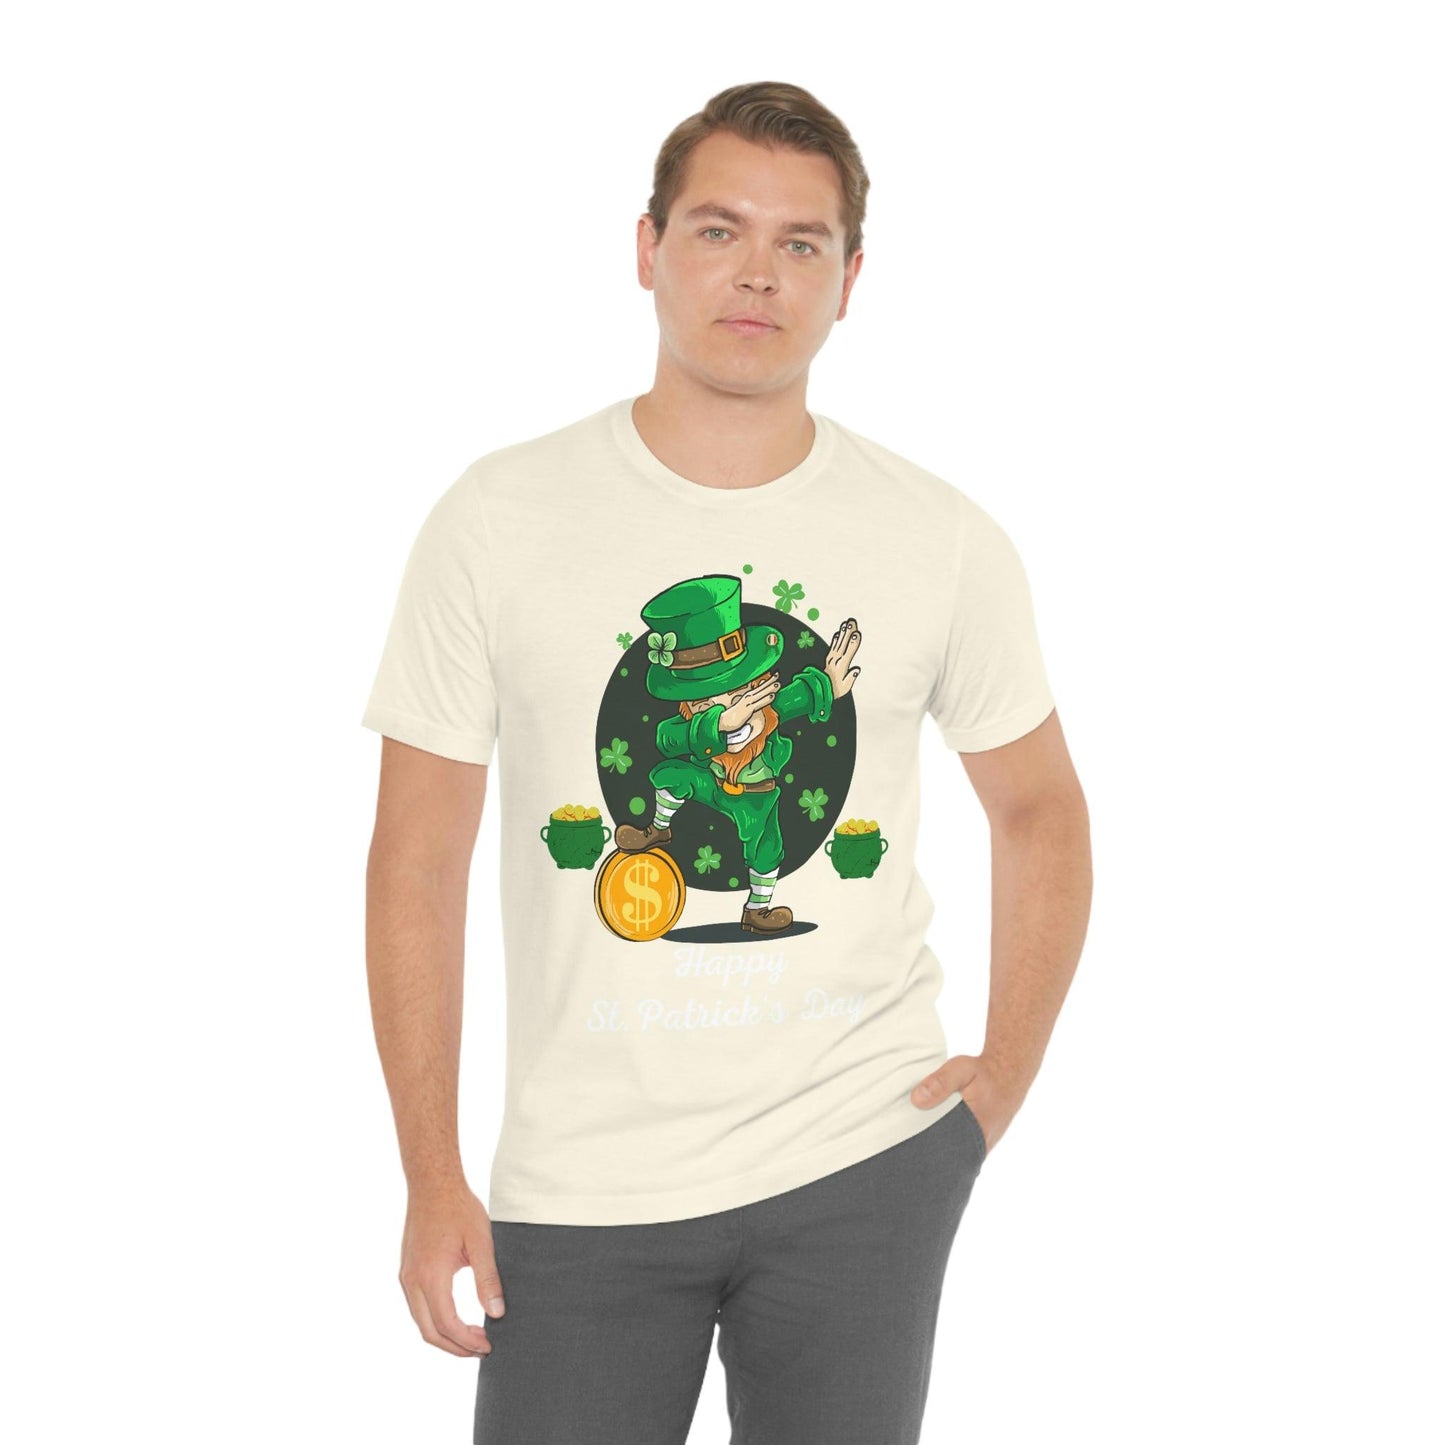 Happy St Patrick's Day shirt luck of the Irish shirt - Shamrock shirt - Giftsmojo